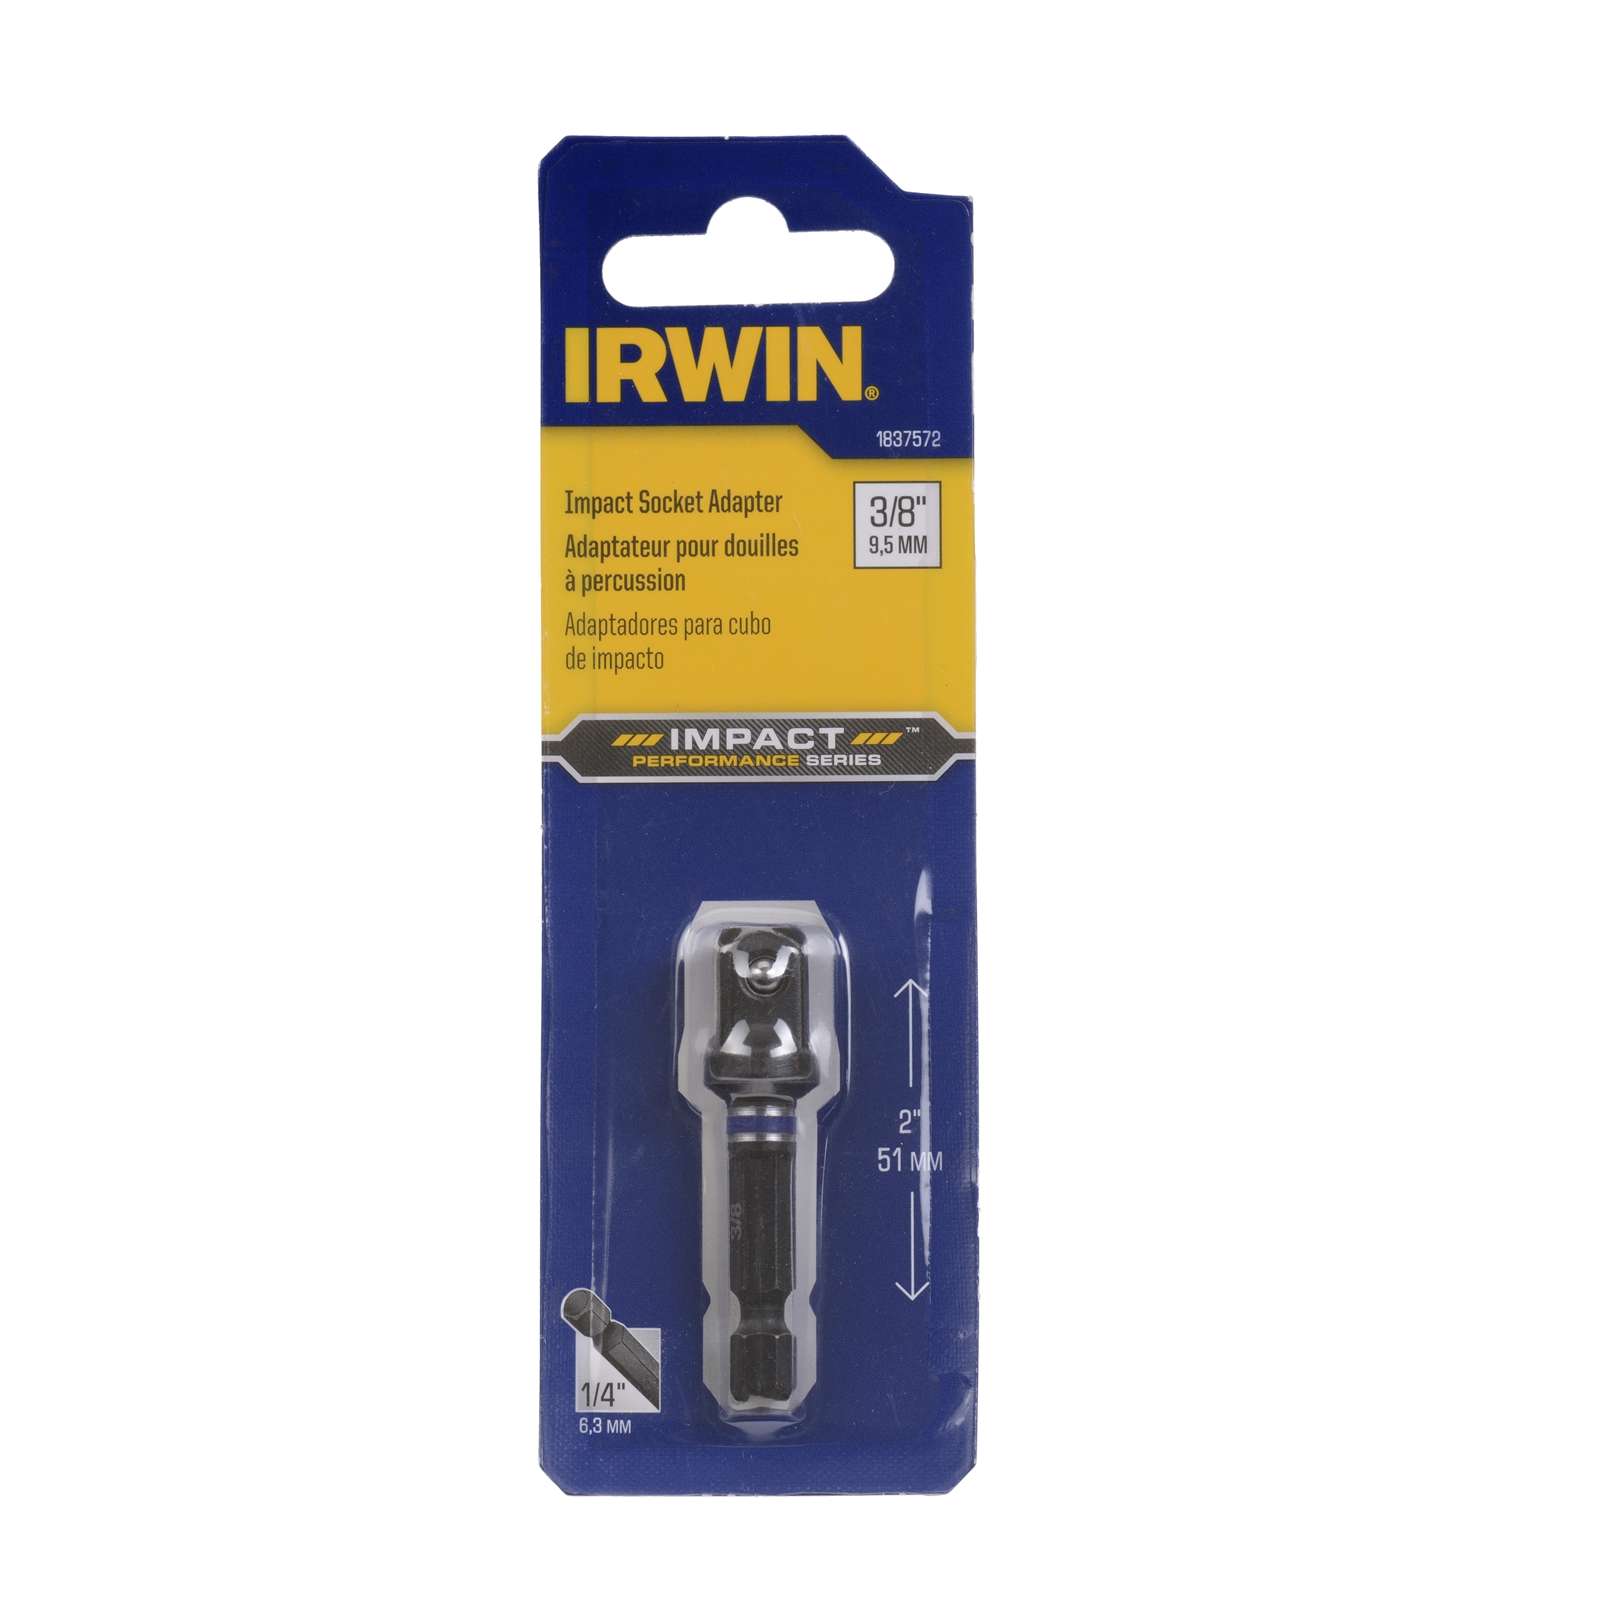 Irwin 50mm 3 / 8" Impact Screwdriver Bit